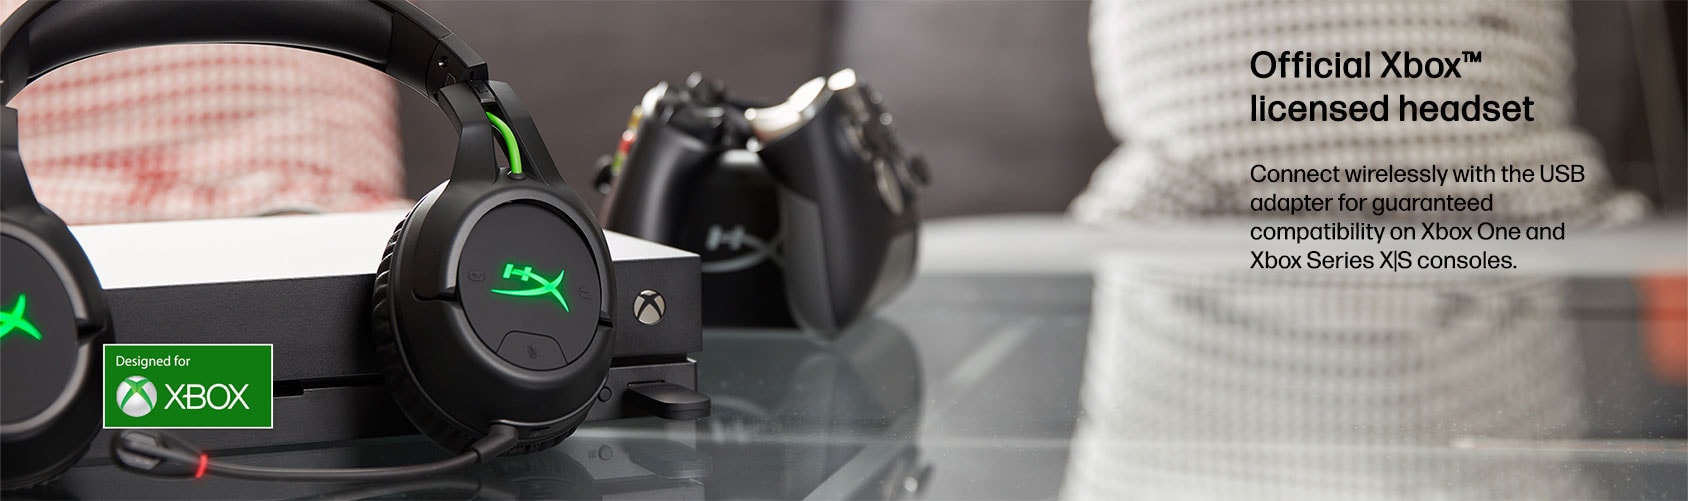 Official Xboxâ¢ licensed headset